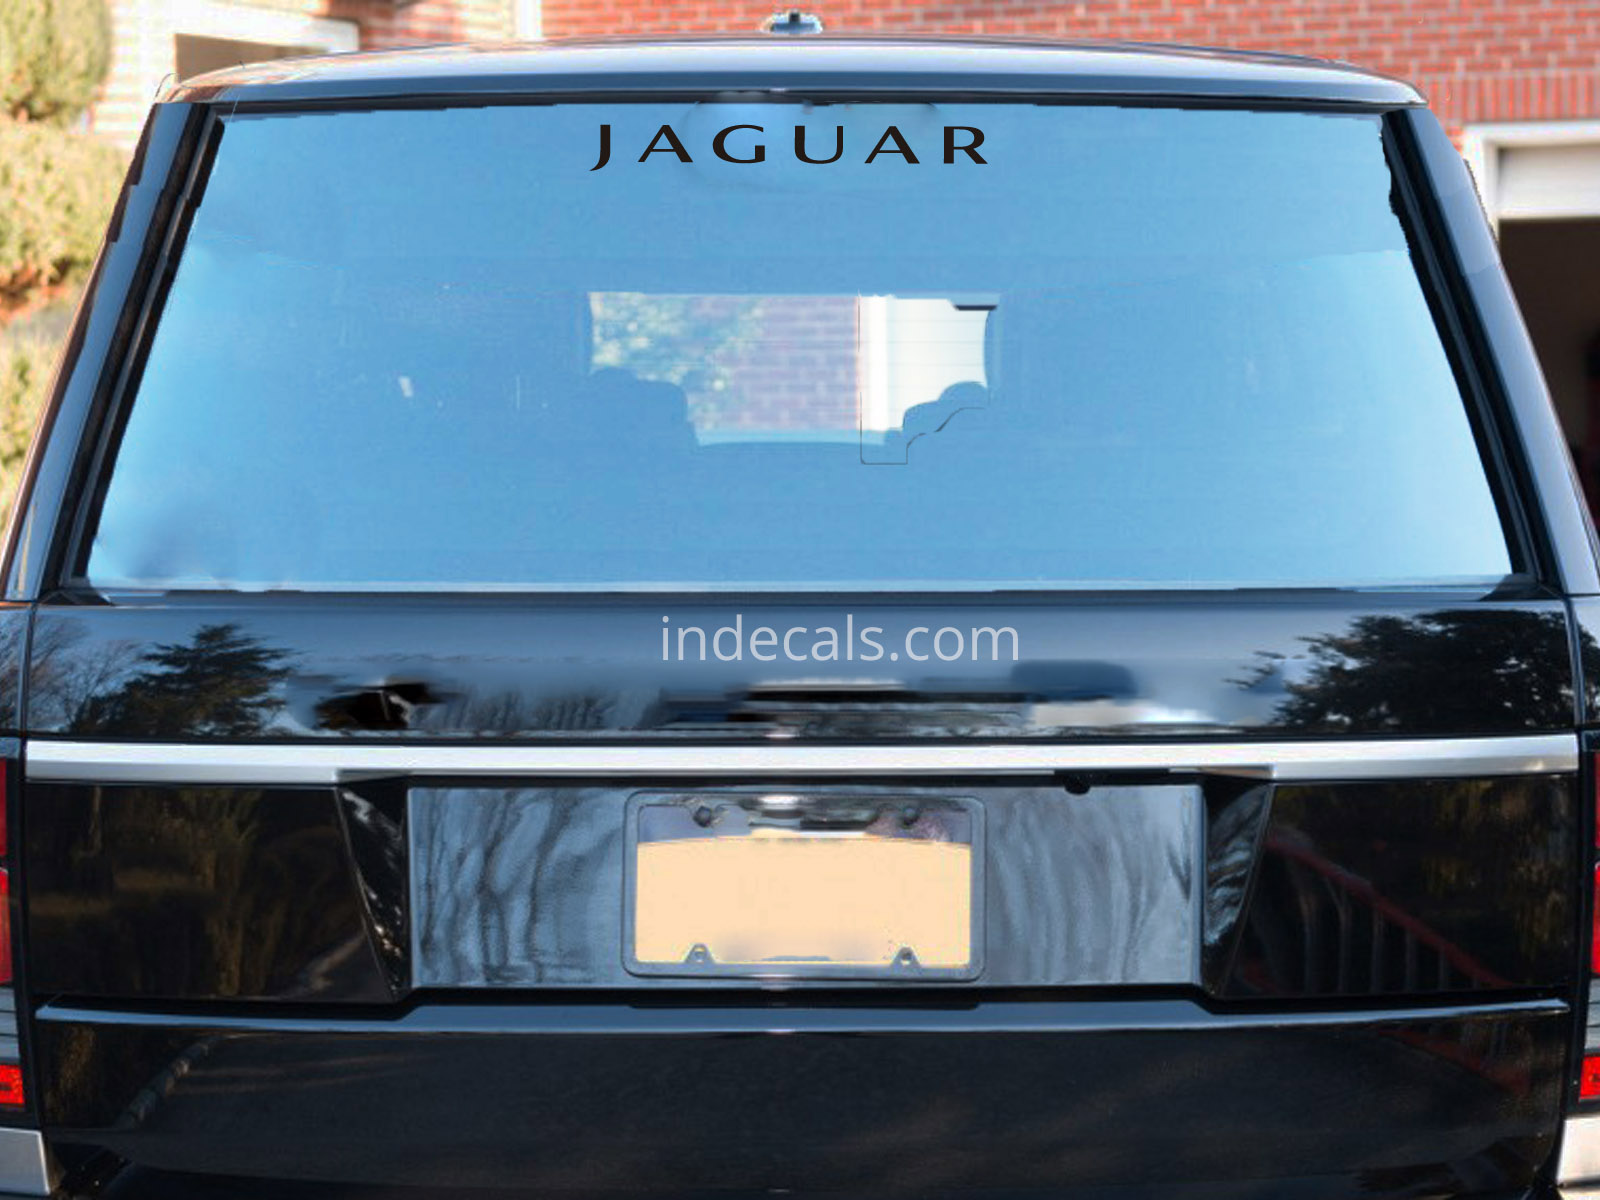 1 x Jaguar Sticker for Windshield or Back Window - Black